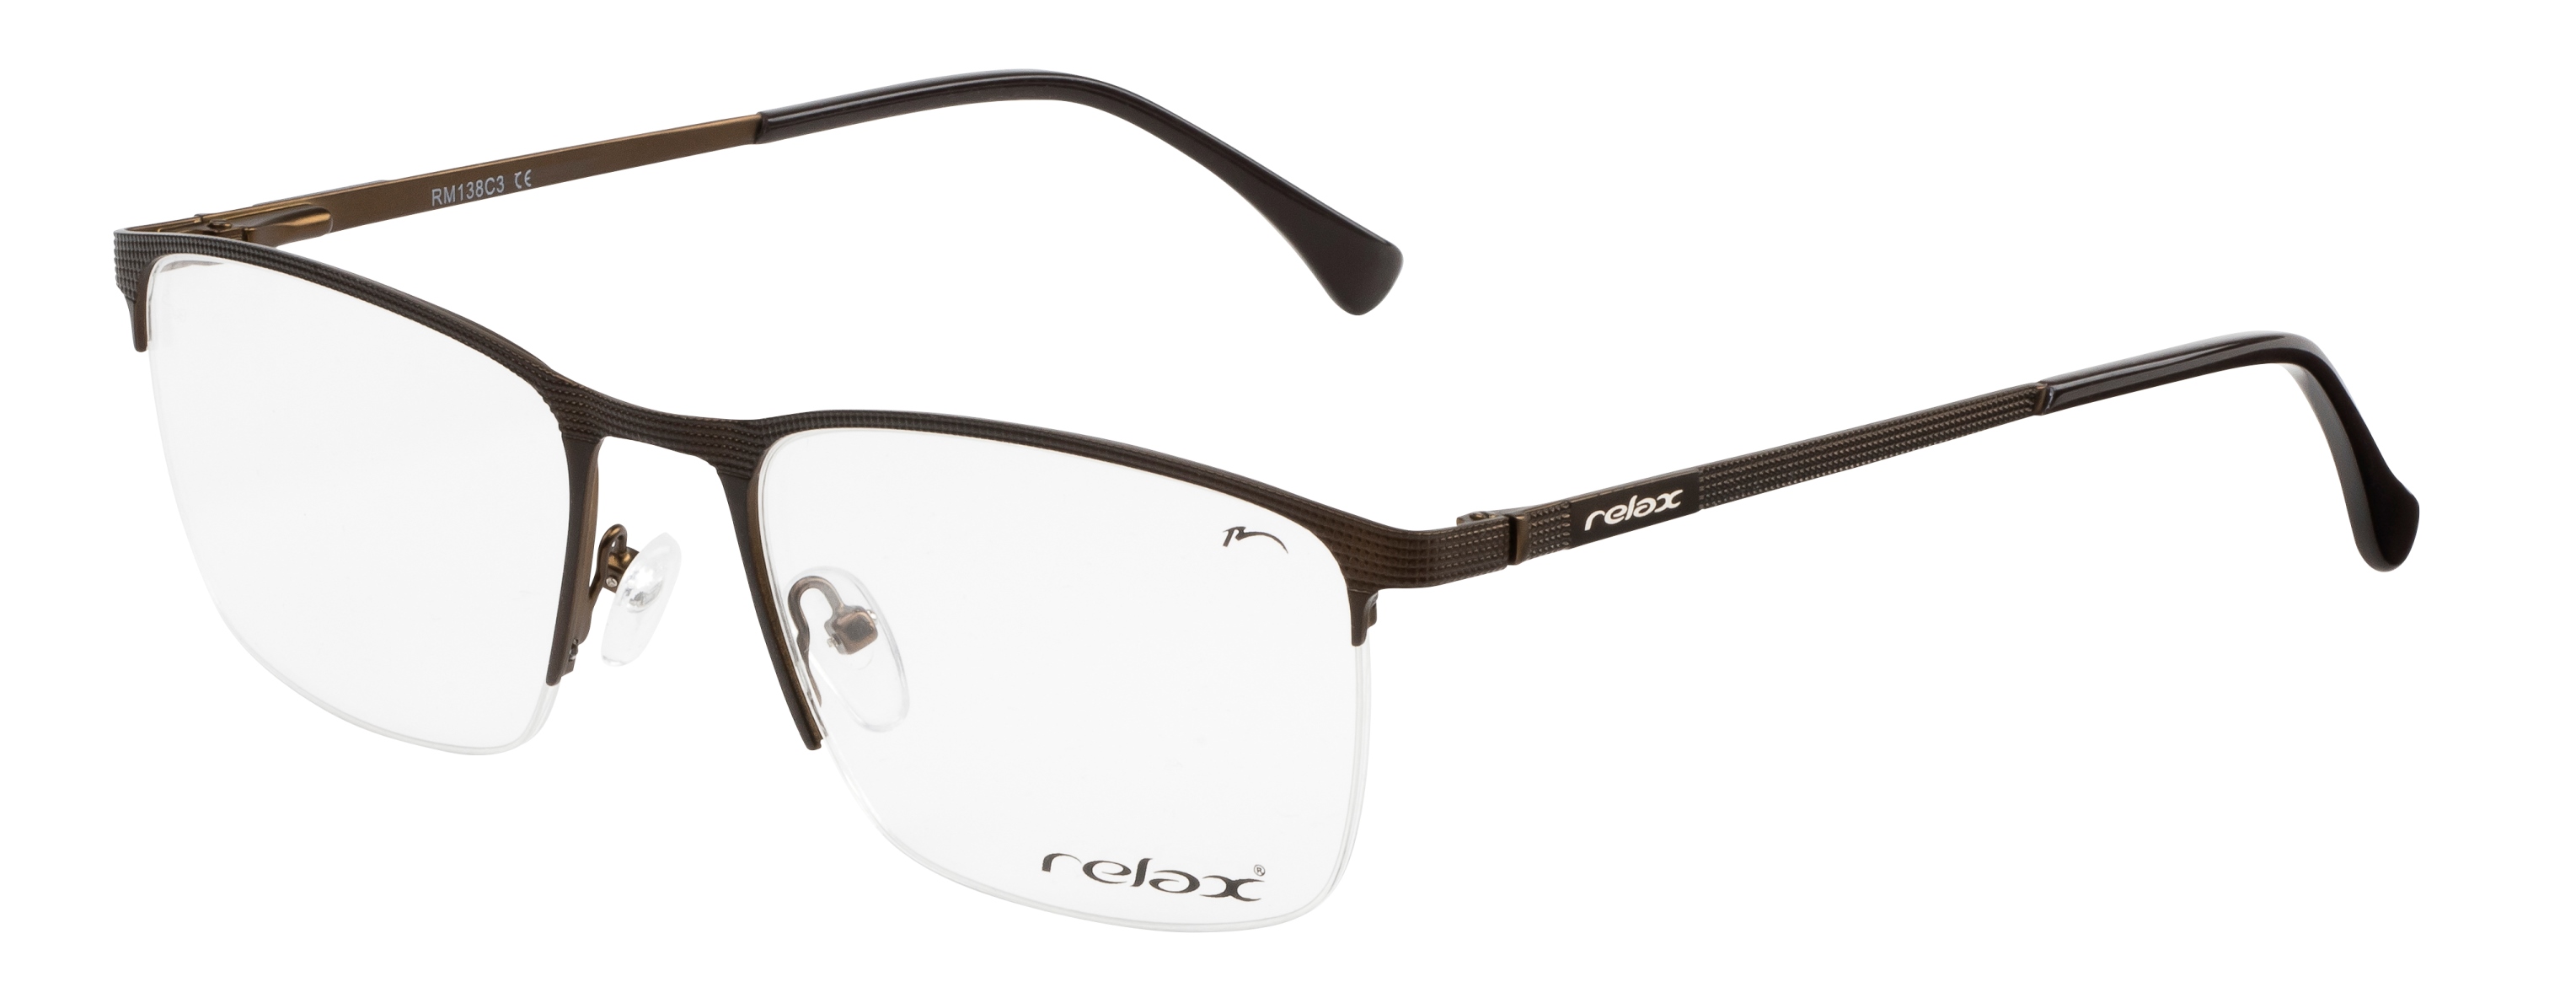 Optical frames Relax Arco RM138C3